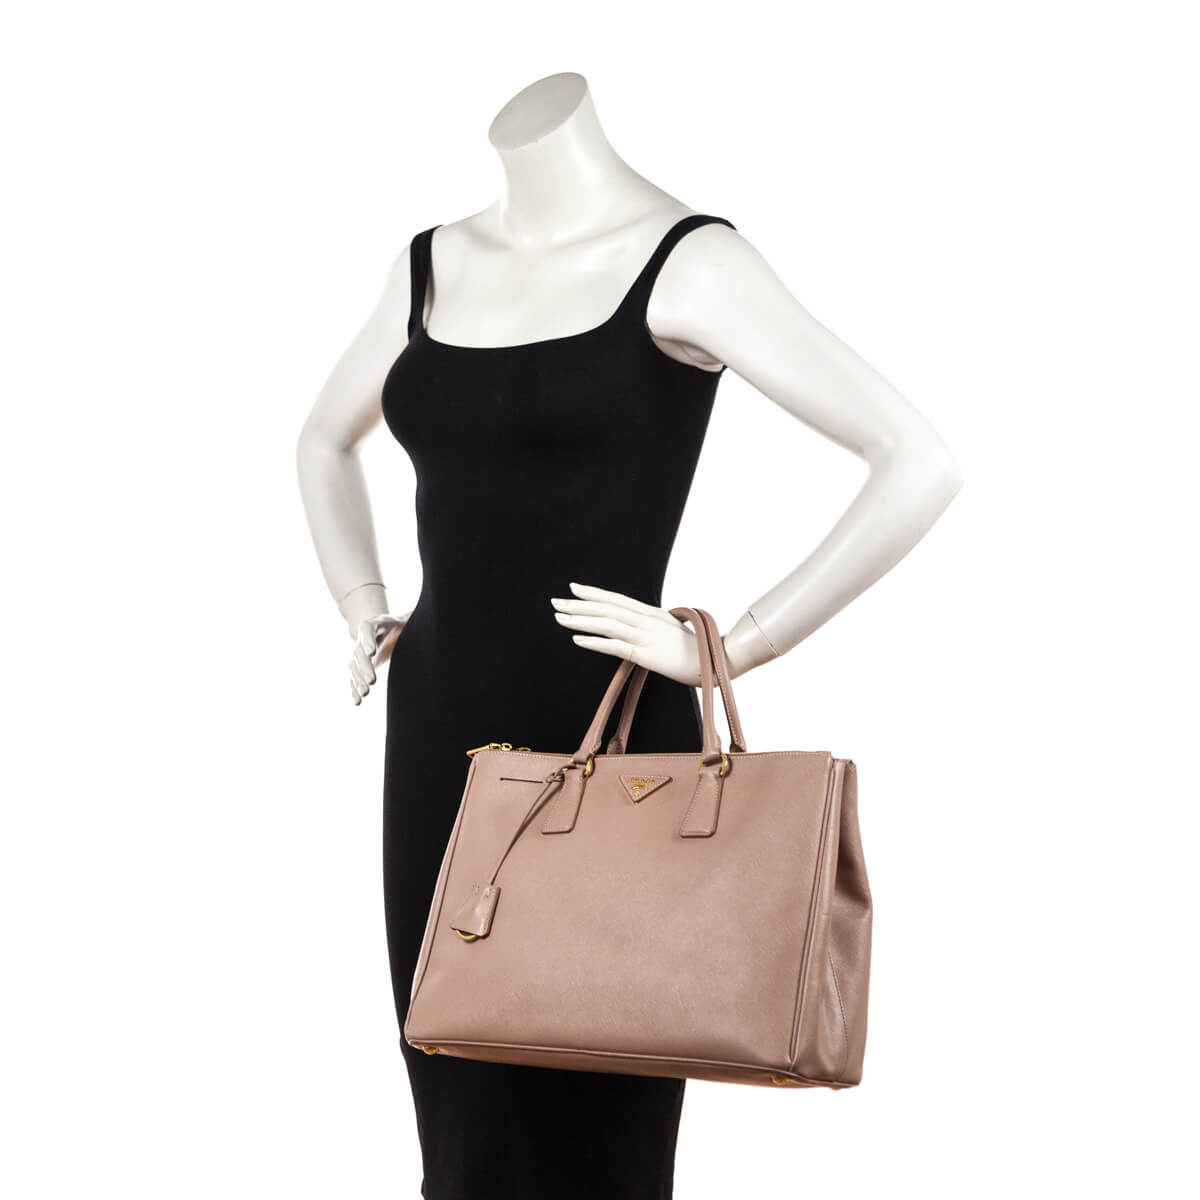 Prada Saffiano Lux Medium Tote Bag Cammeo Nude Colour-Very Good Cond &  Authentic